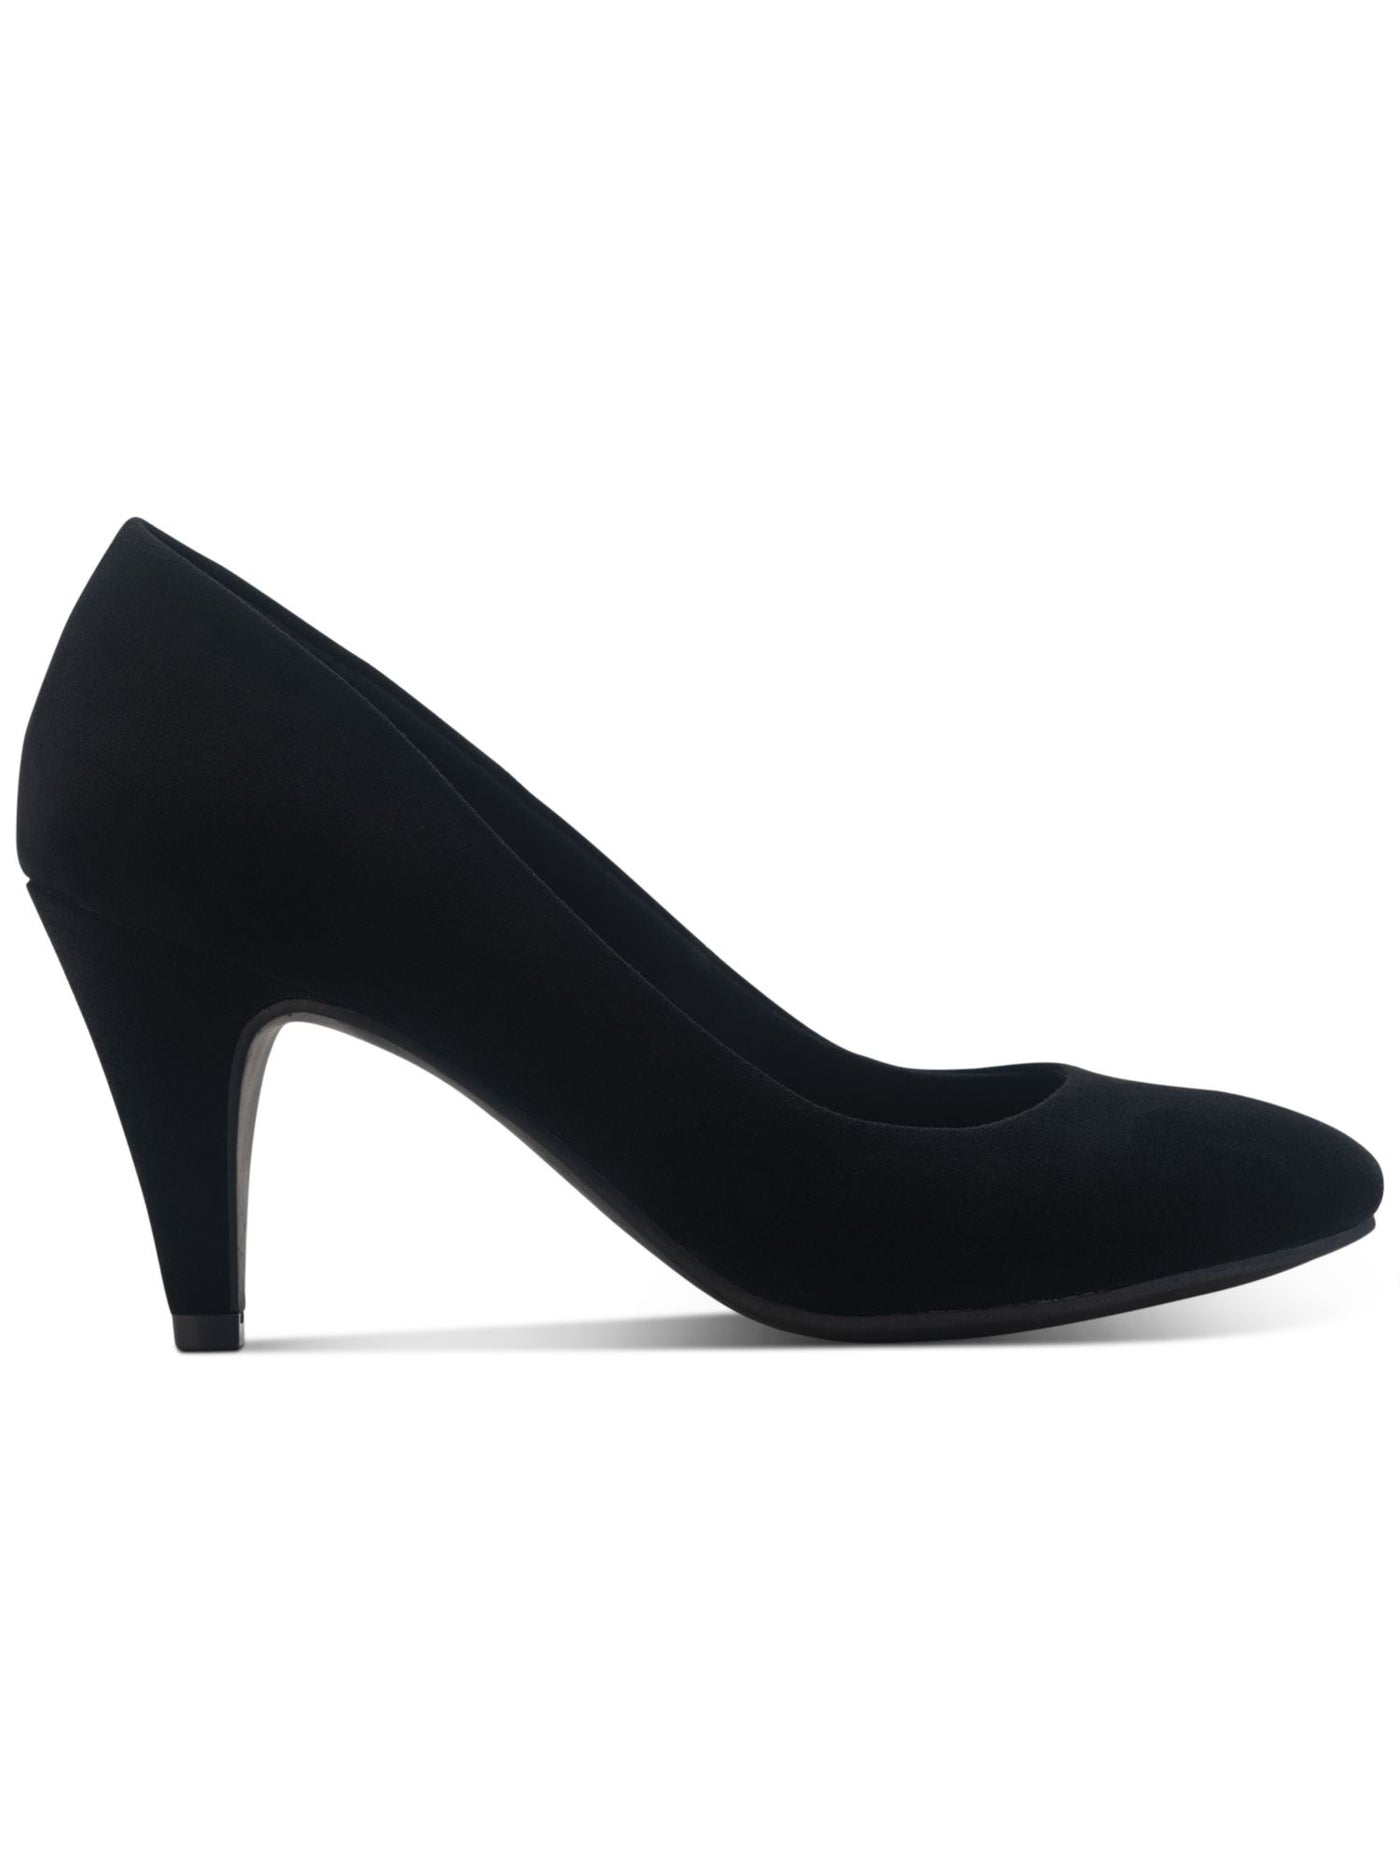 SUN STONE Womens Black Cushioned Breathable Felix Round Toe Cone Heel Slip On Dress Pumps Shoes 7 M